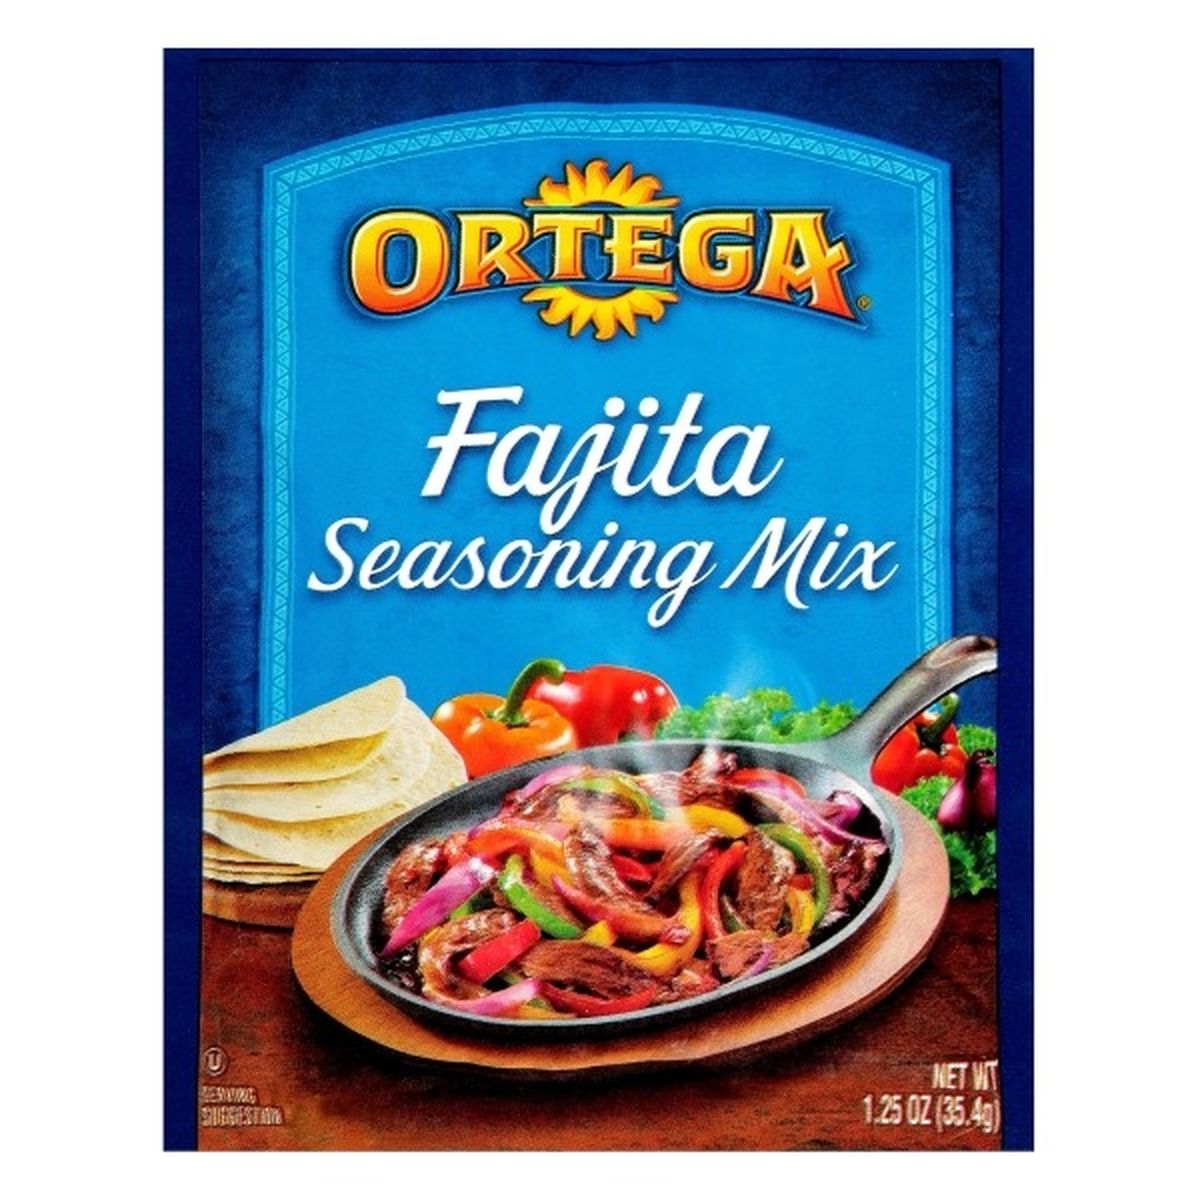 Calories in Ortega Fajita Seasoning Mix